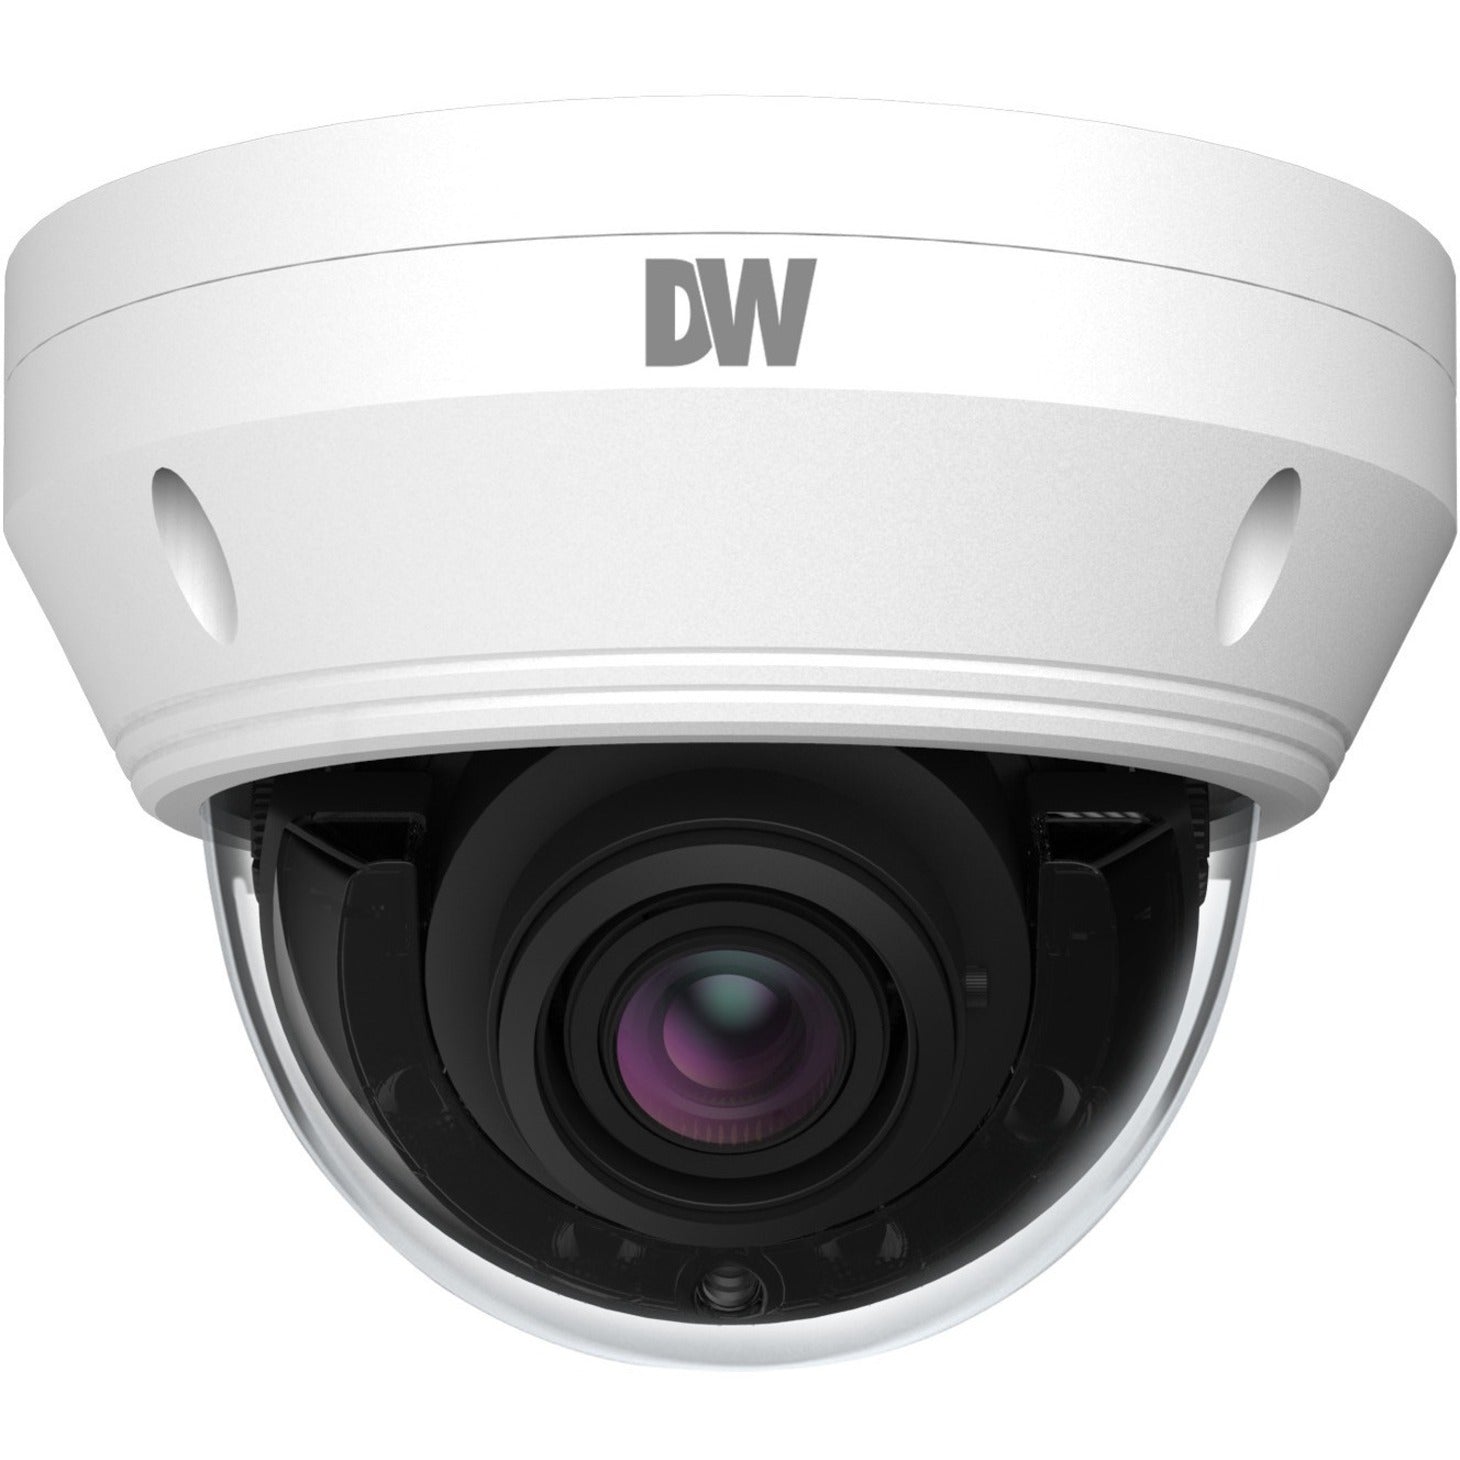 Digital Watchdog DWC-MV95WIATW MEGAPIX 5MP Vandal Dome IP Camera, Varifocal Lens, 4.3x Optical Zoom, H.265 Video Format, 60 fps, 2592 x 1944 Maximum Video Resolution